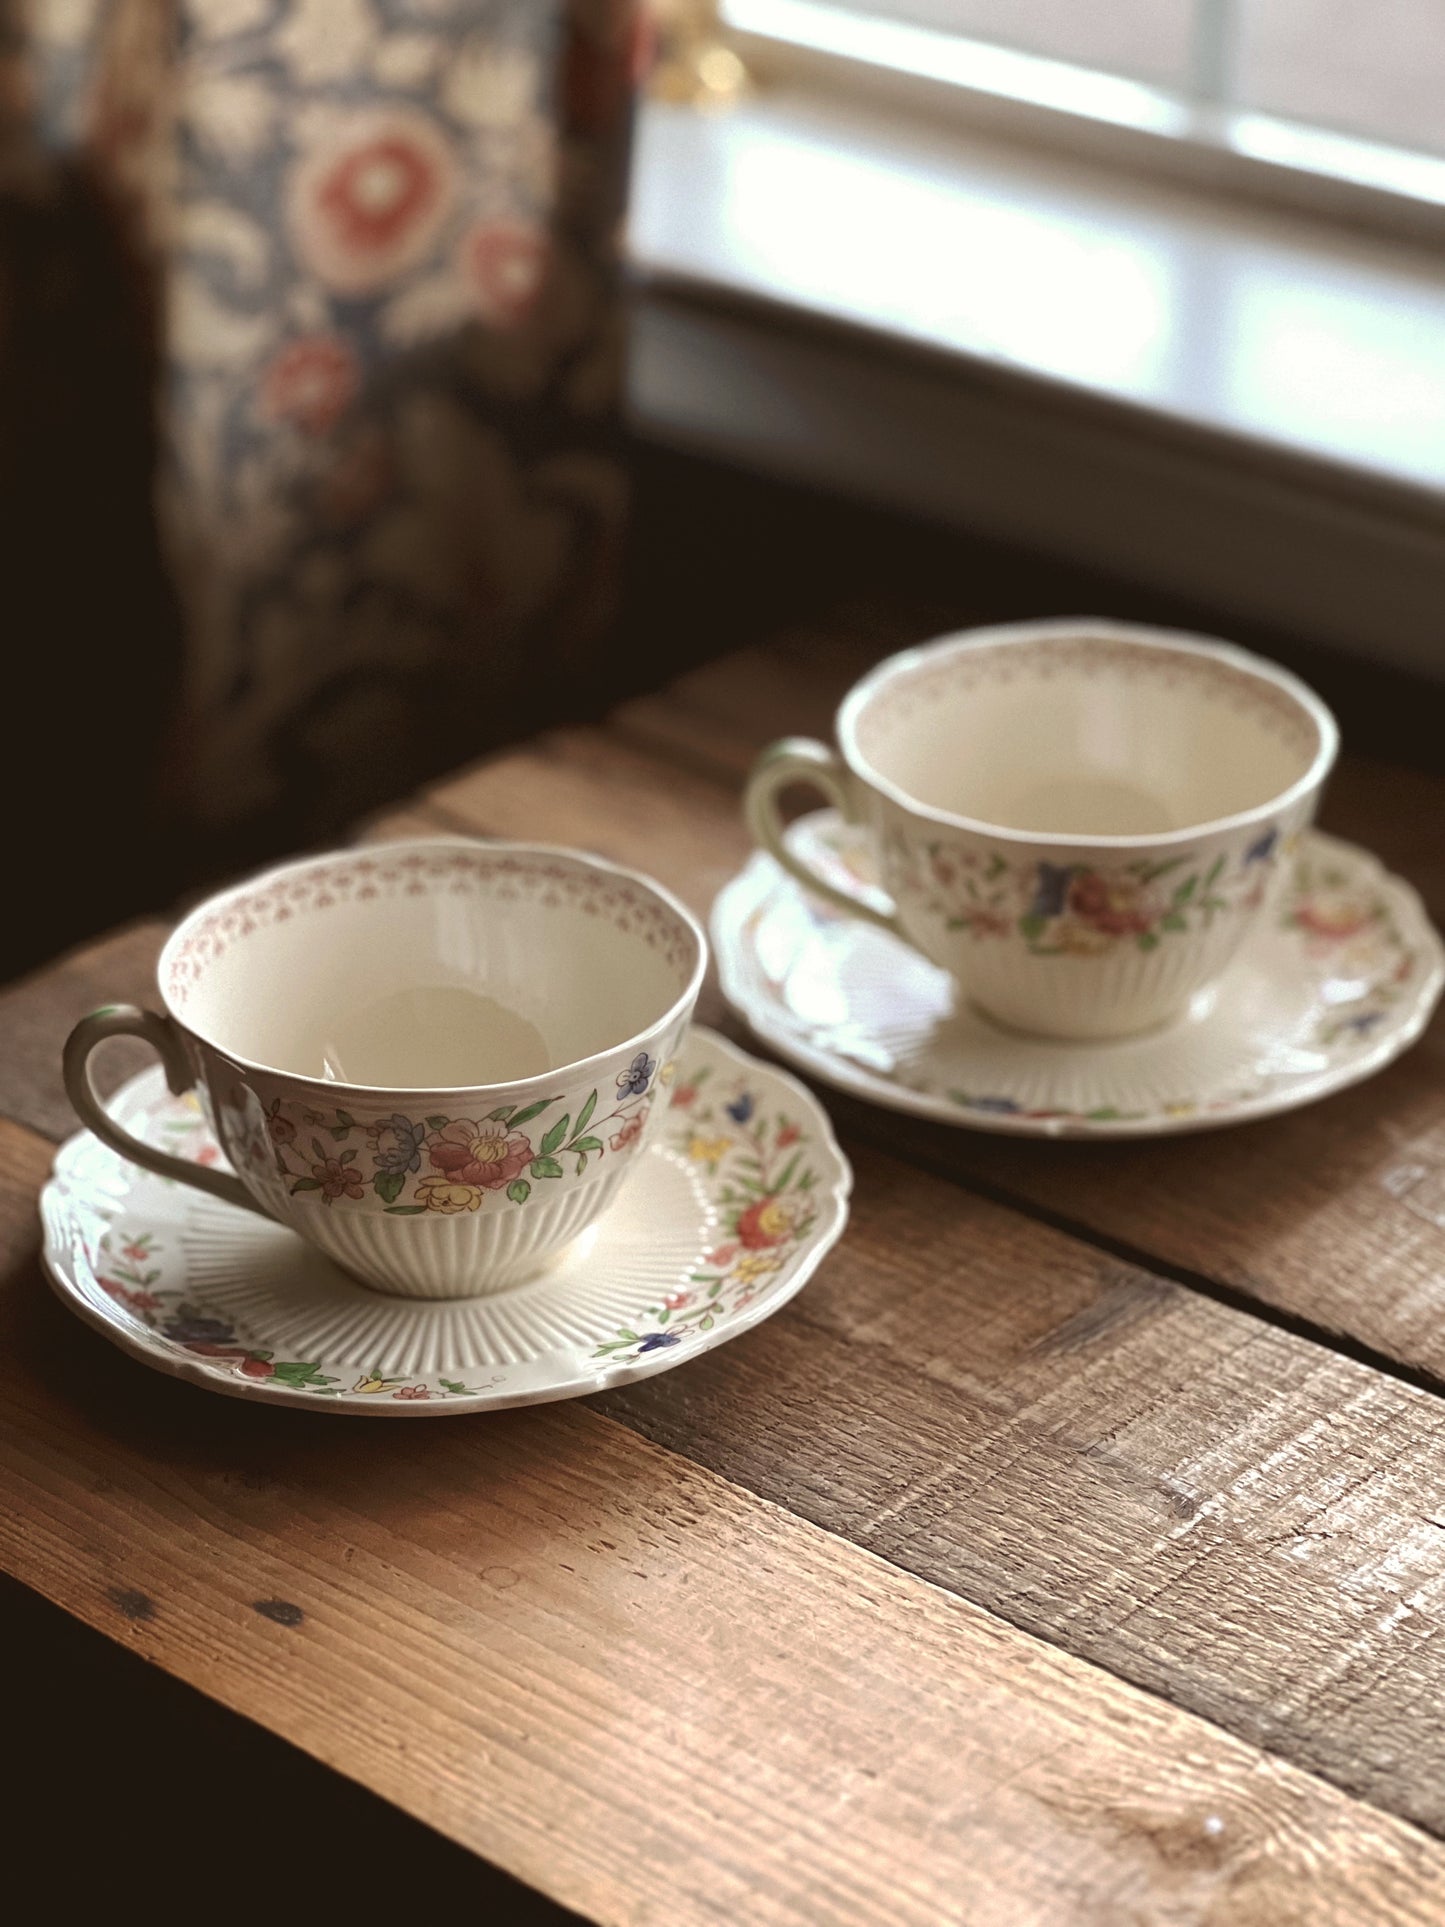 Vintage Royal Doulton The Medford Tea Cup & Saucer Set